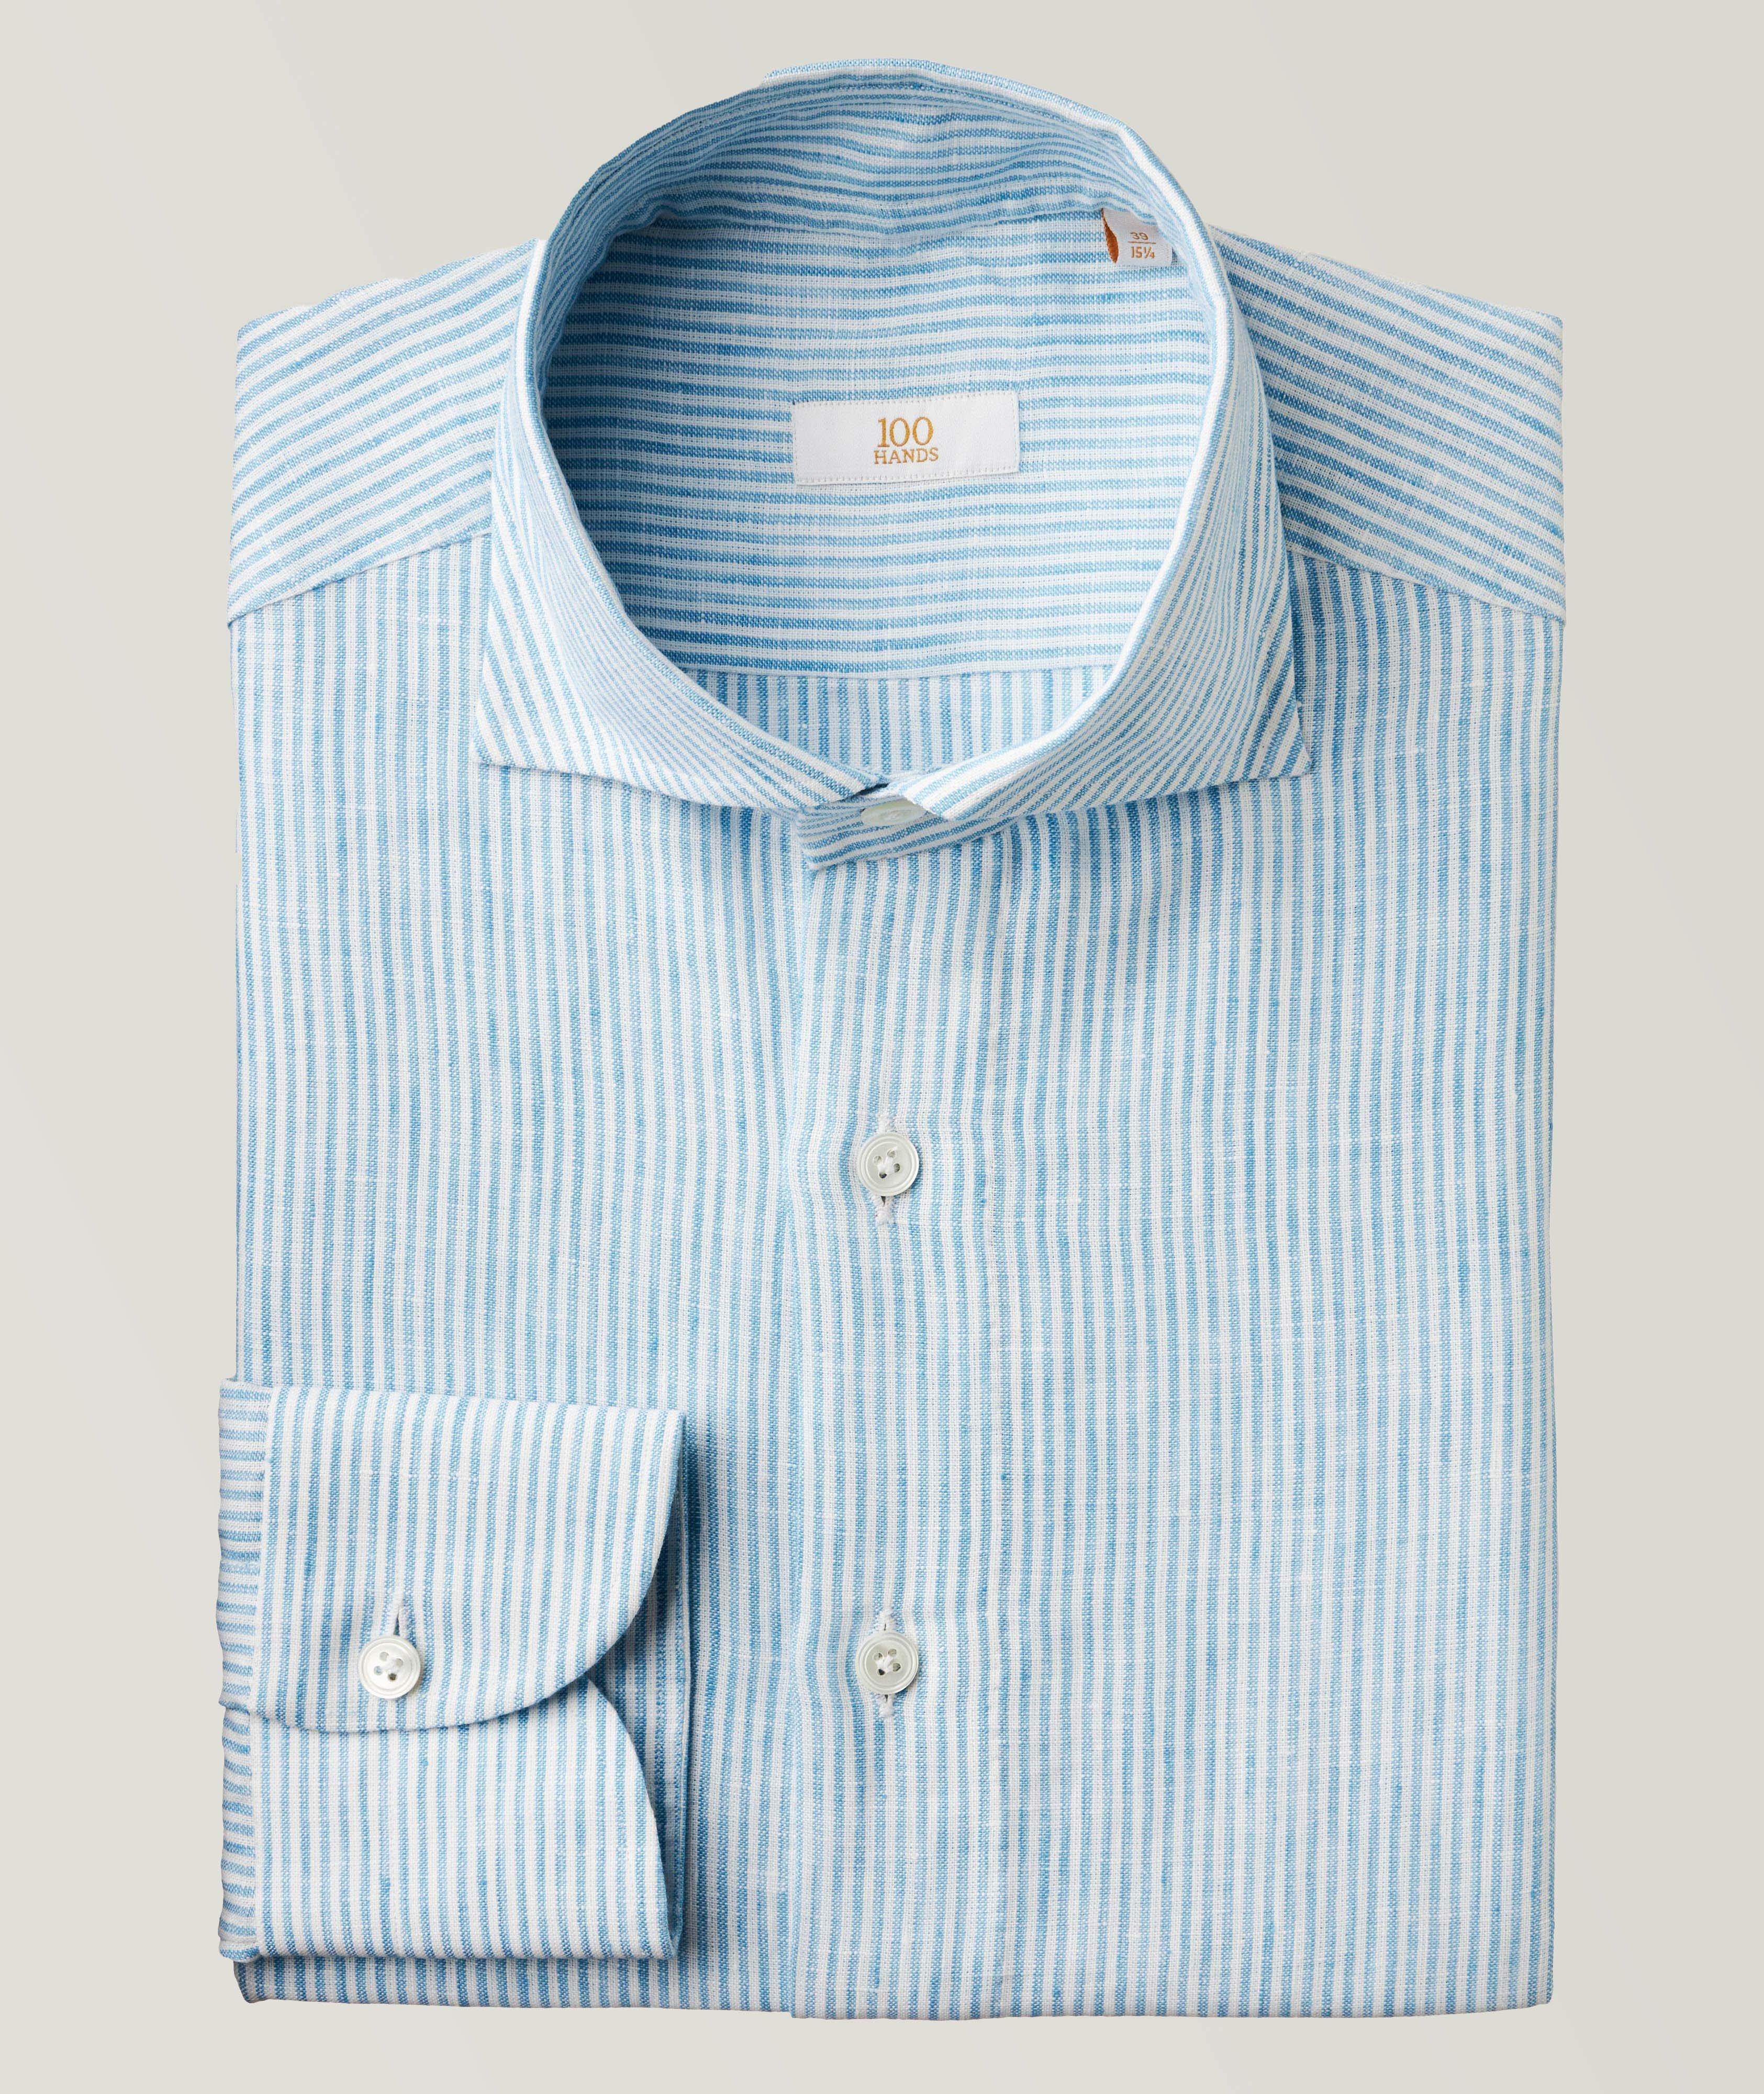 Chemise habillée en lin à fines rayures, collection or image 0